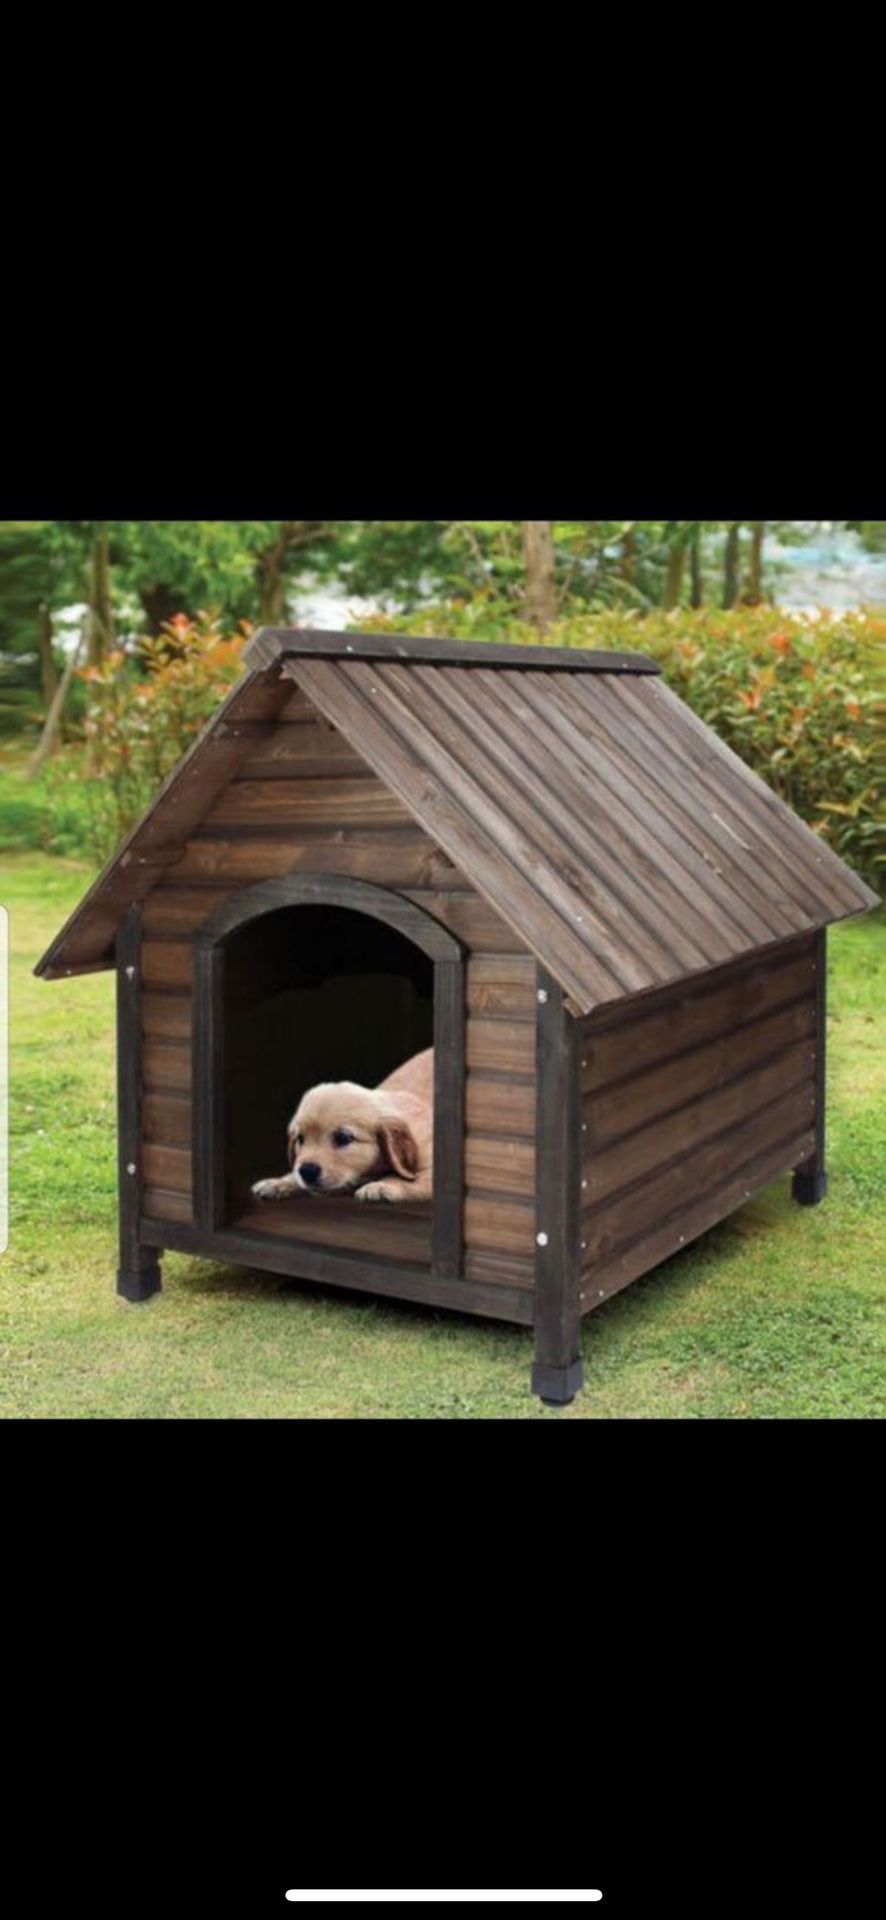 Brand new small wooden doghouse! Nueva casita chica de madera para mascota!!